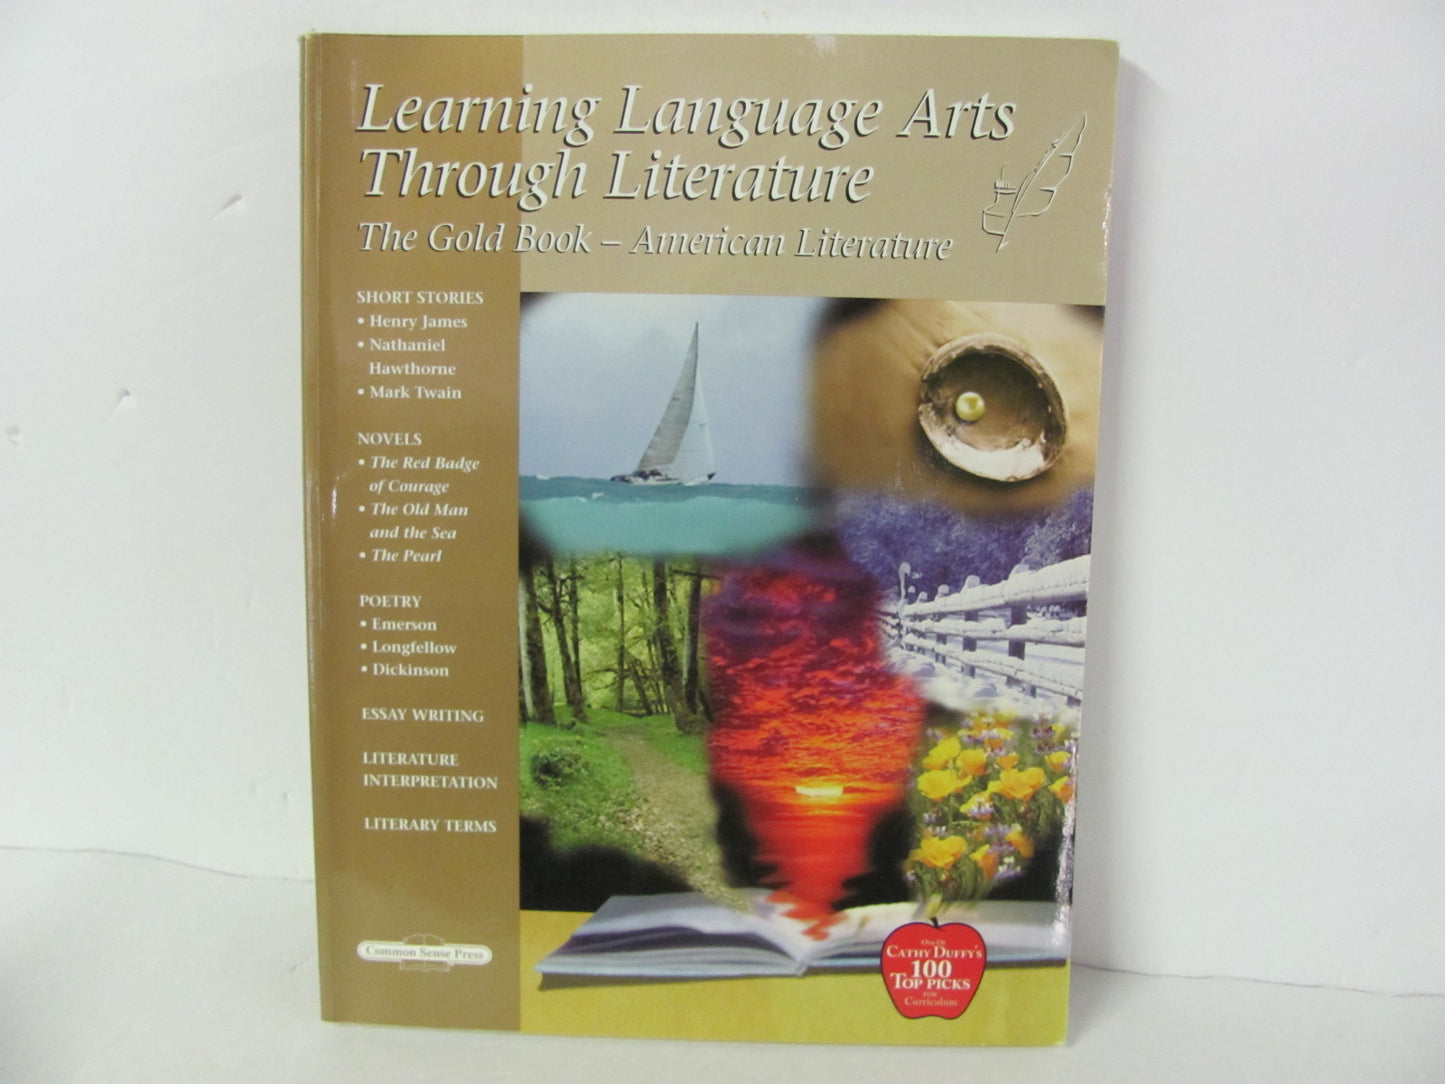 Learning Language Arts Through Lit Common Sense Pre-Owned Language Textbooks